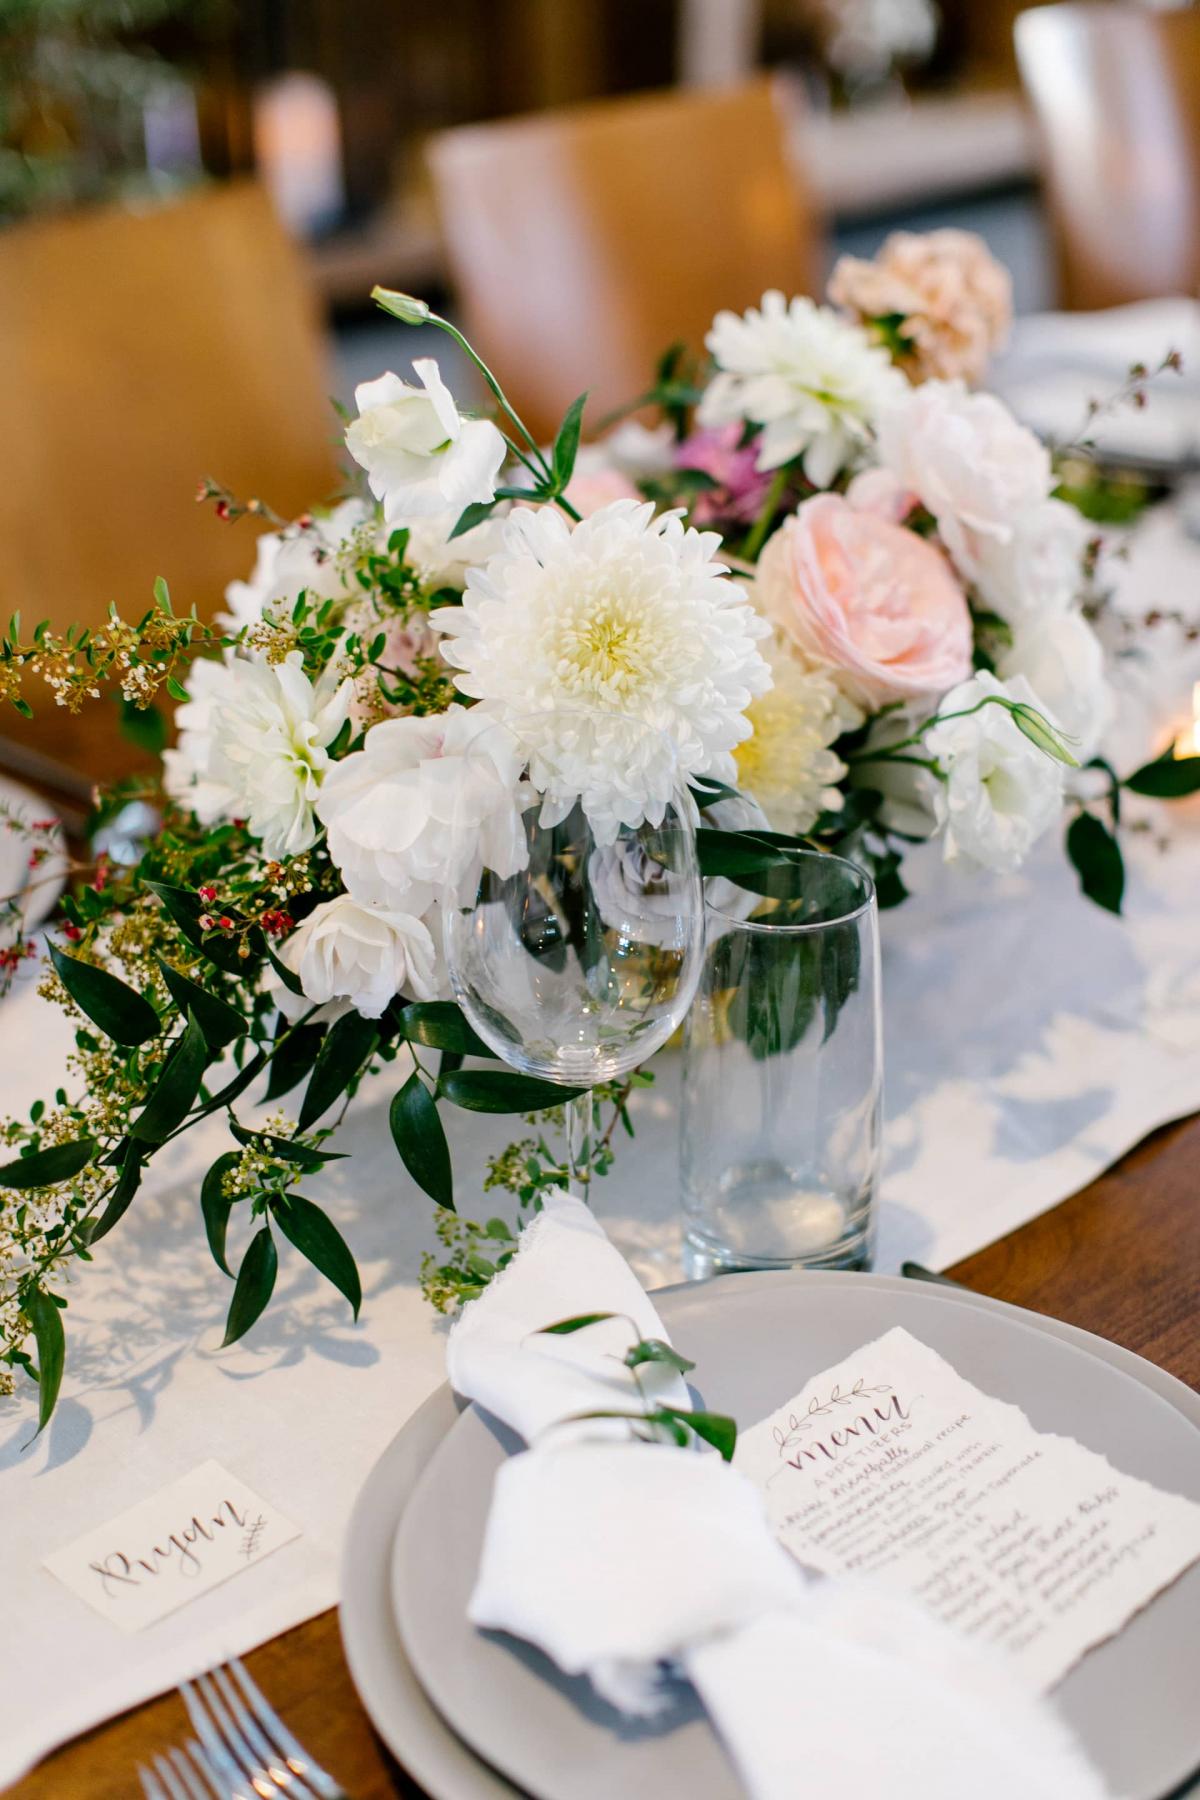 Reception Table with Placemat, Menu & Flower Arrangement for Danielle & Jake's Wedding